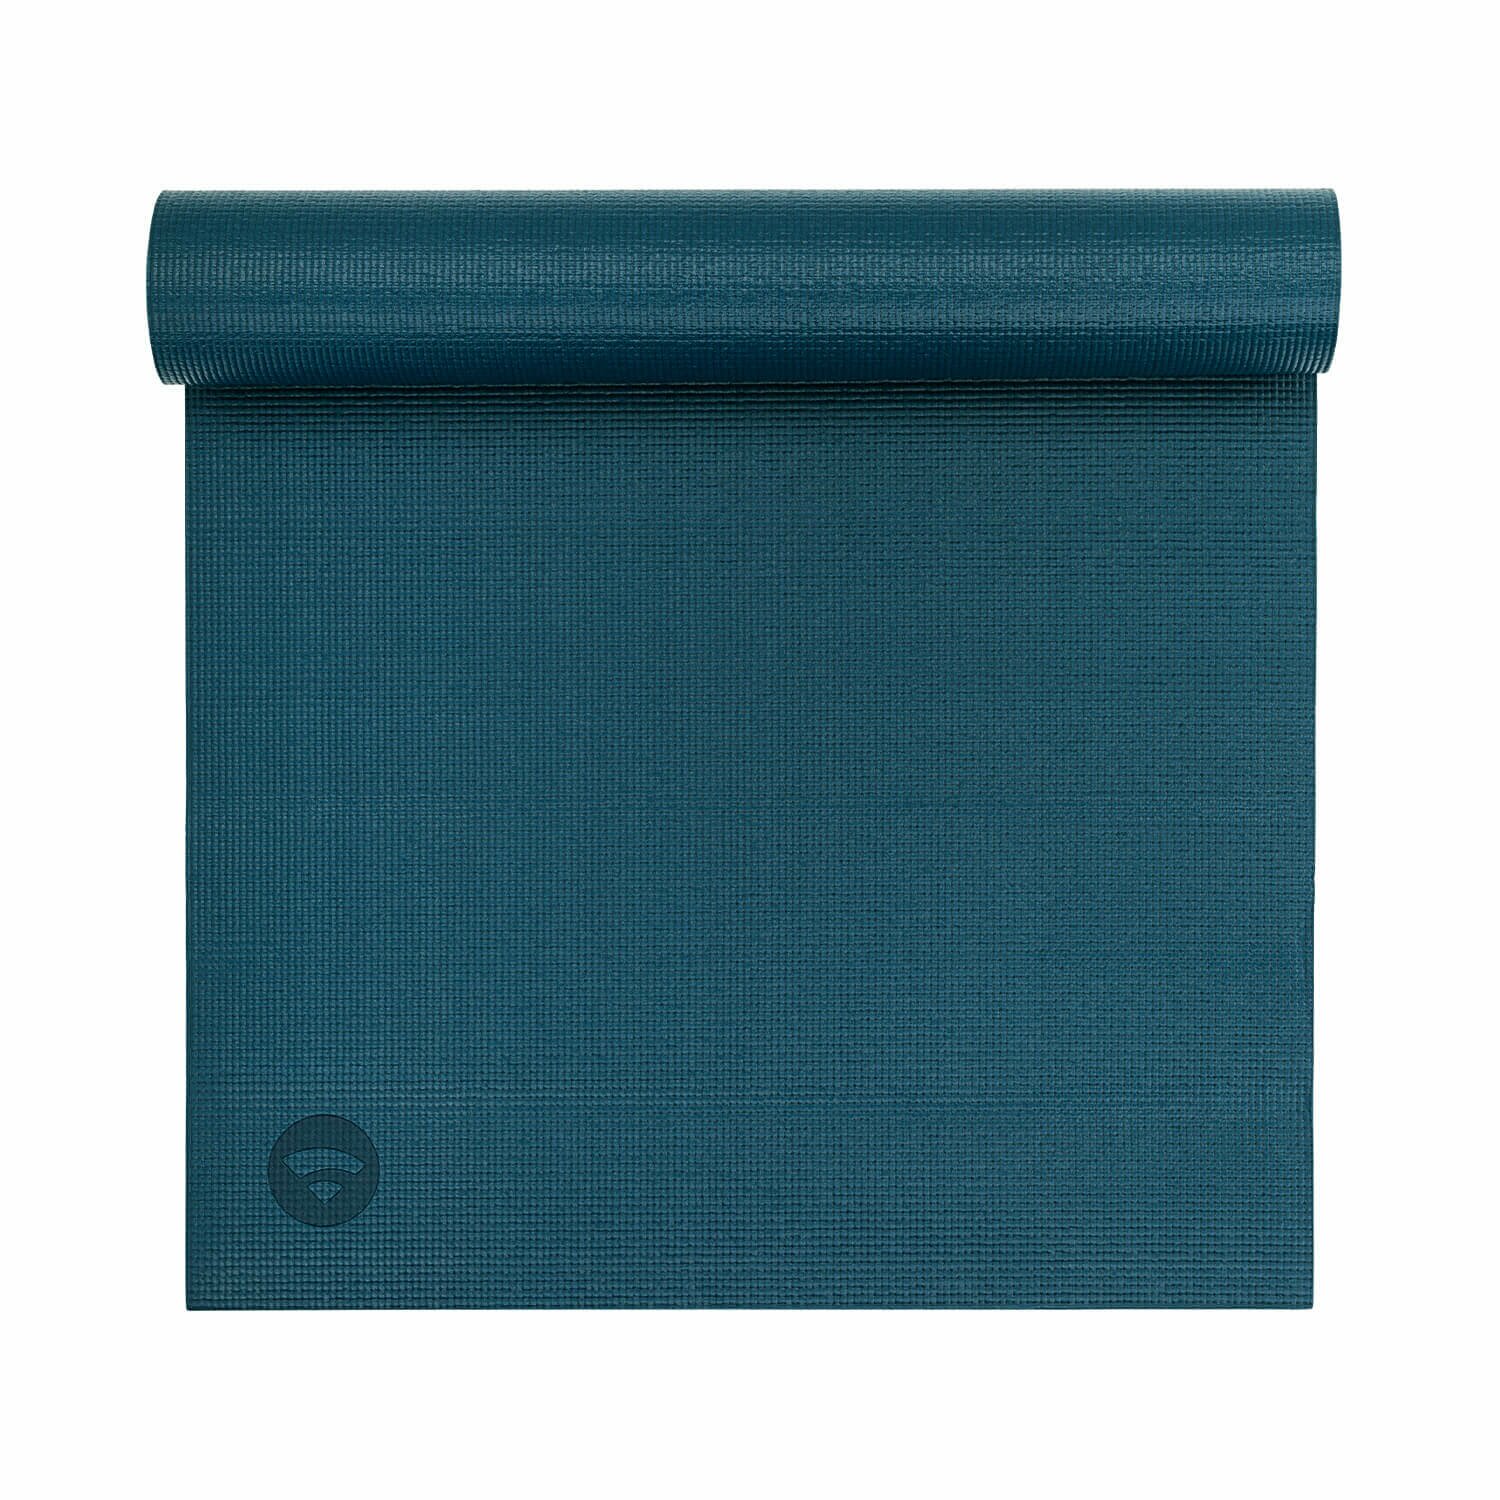 Tapete de yoga Asana - 4.5mm PVC ecológico 11